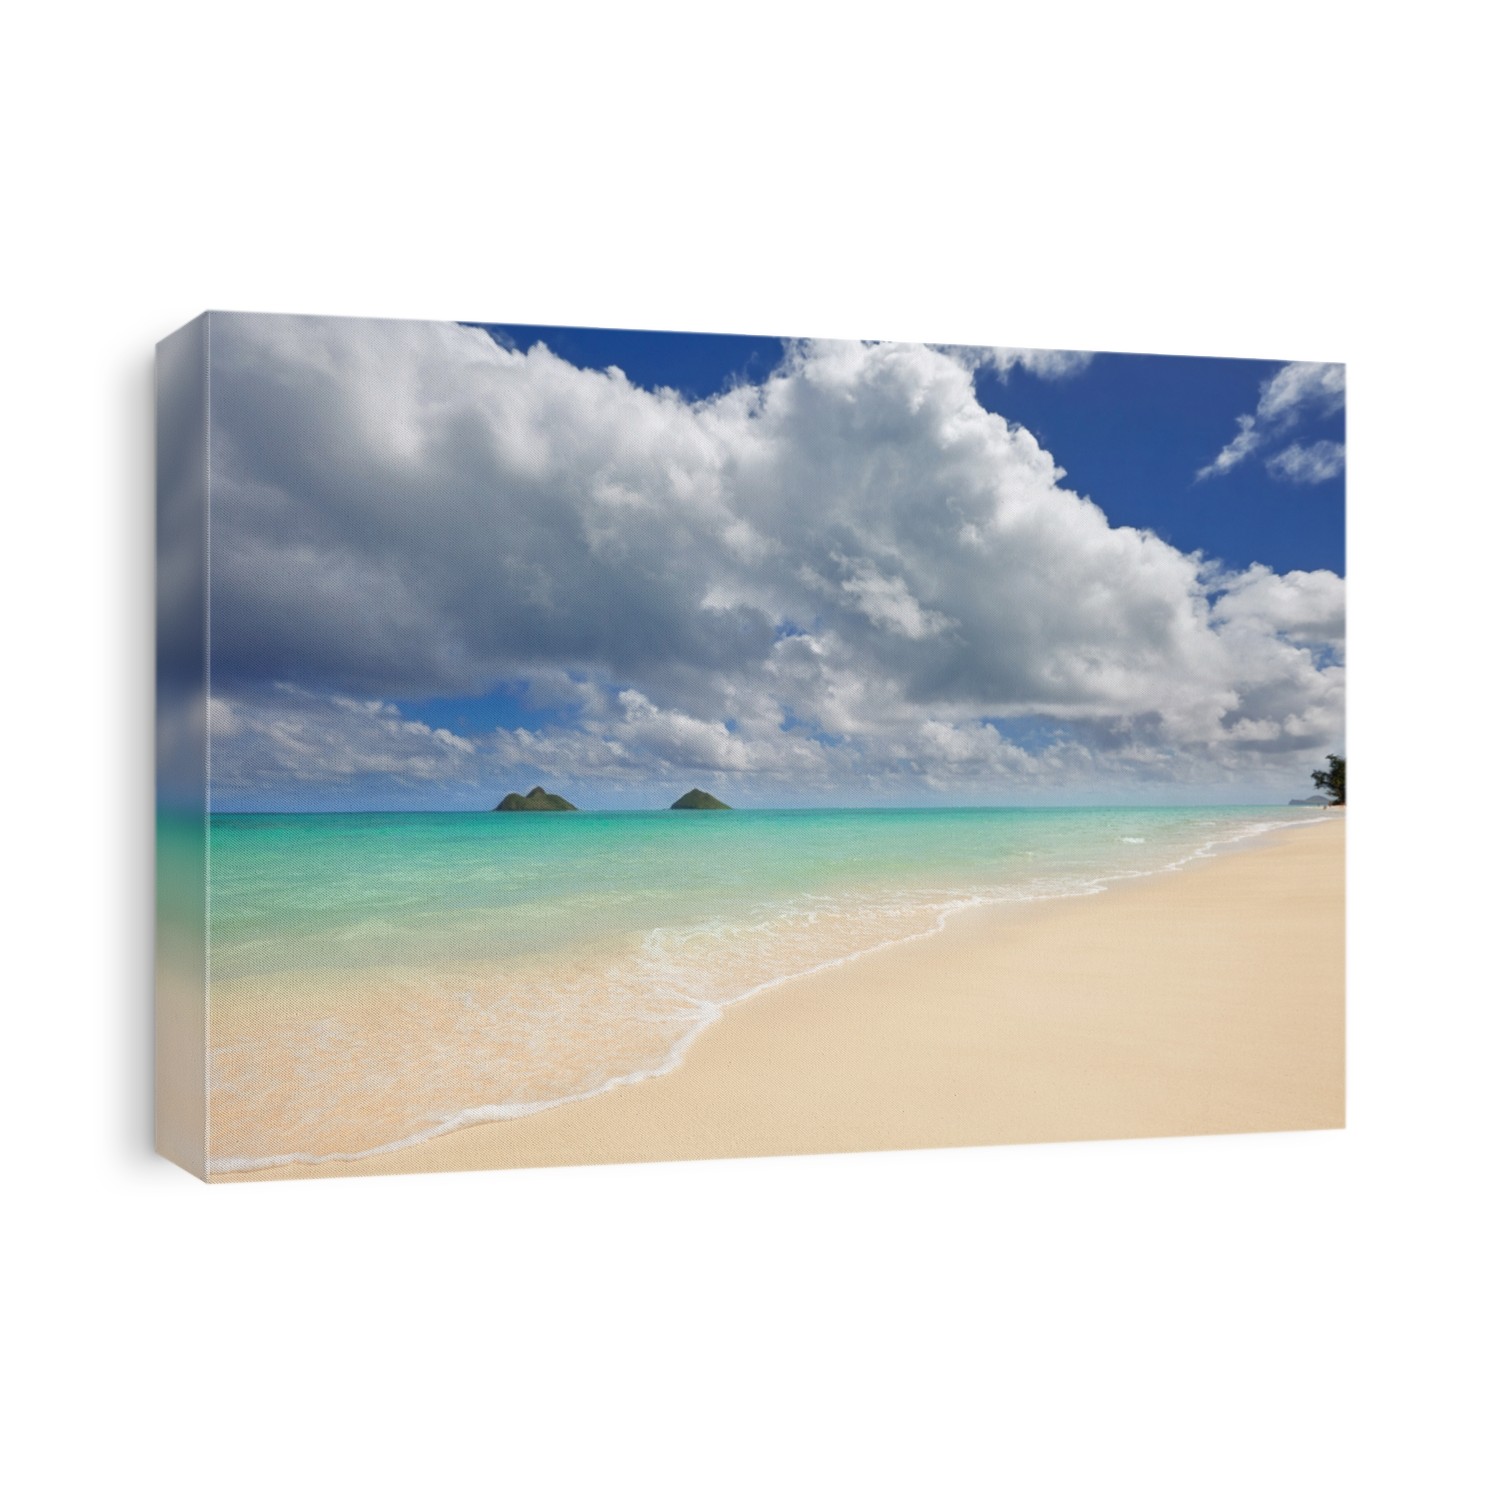 sandy Lanikai Beach and Mokulua Islands, Kailua, O'ahu, Hawai'i